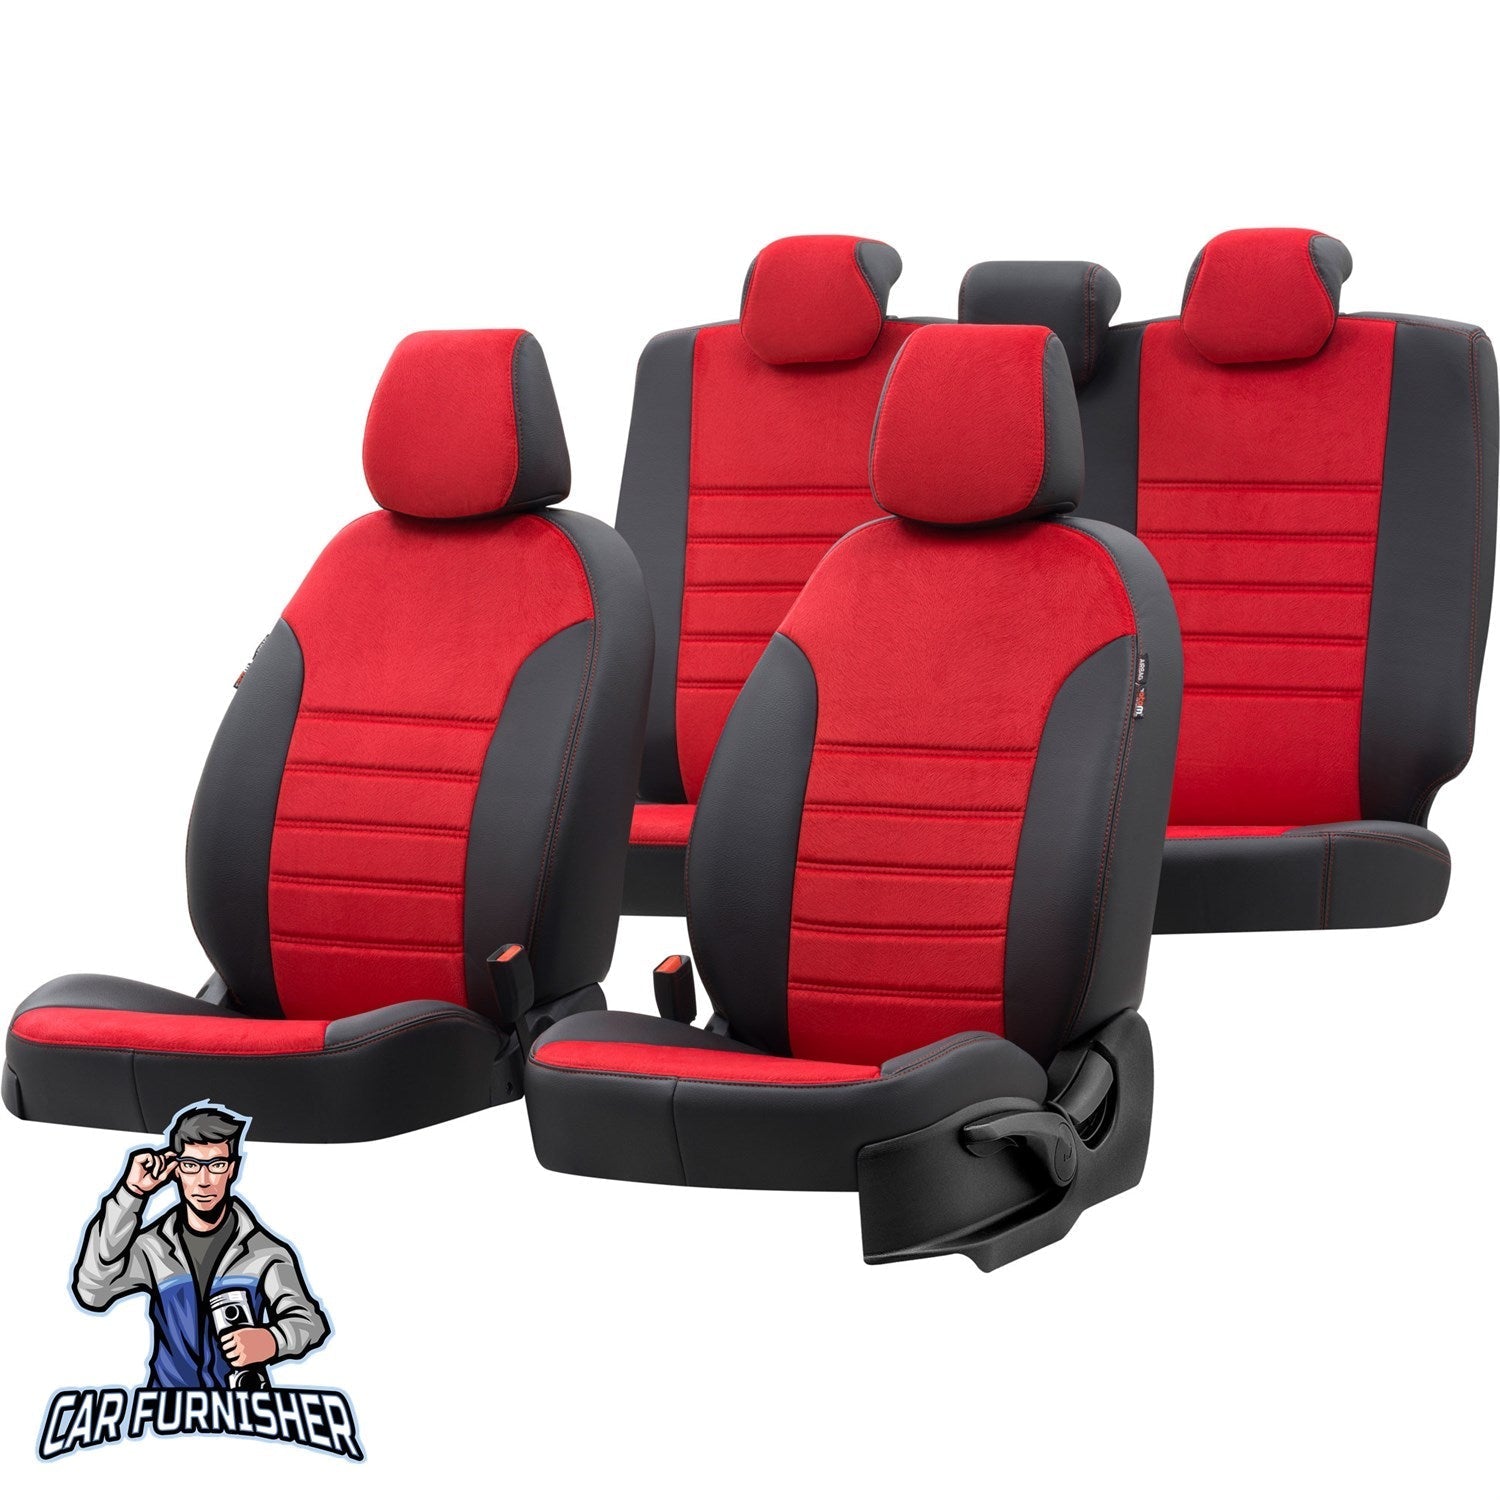 Daihatsu Materia Car Seat Covers 2007-2010 London Design Red Full Set (5 Seats + Handrest) Leather & Fabric